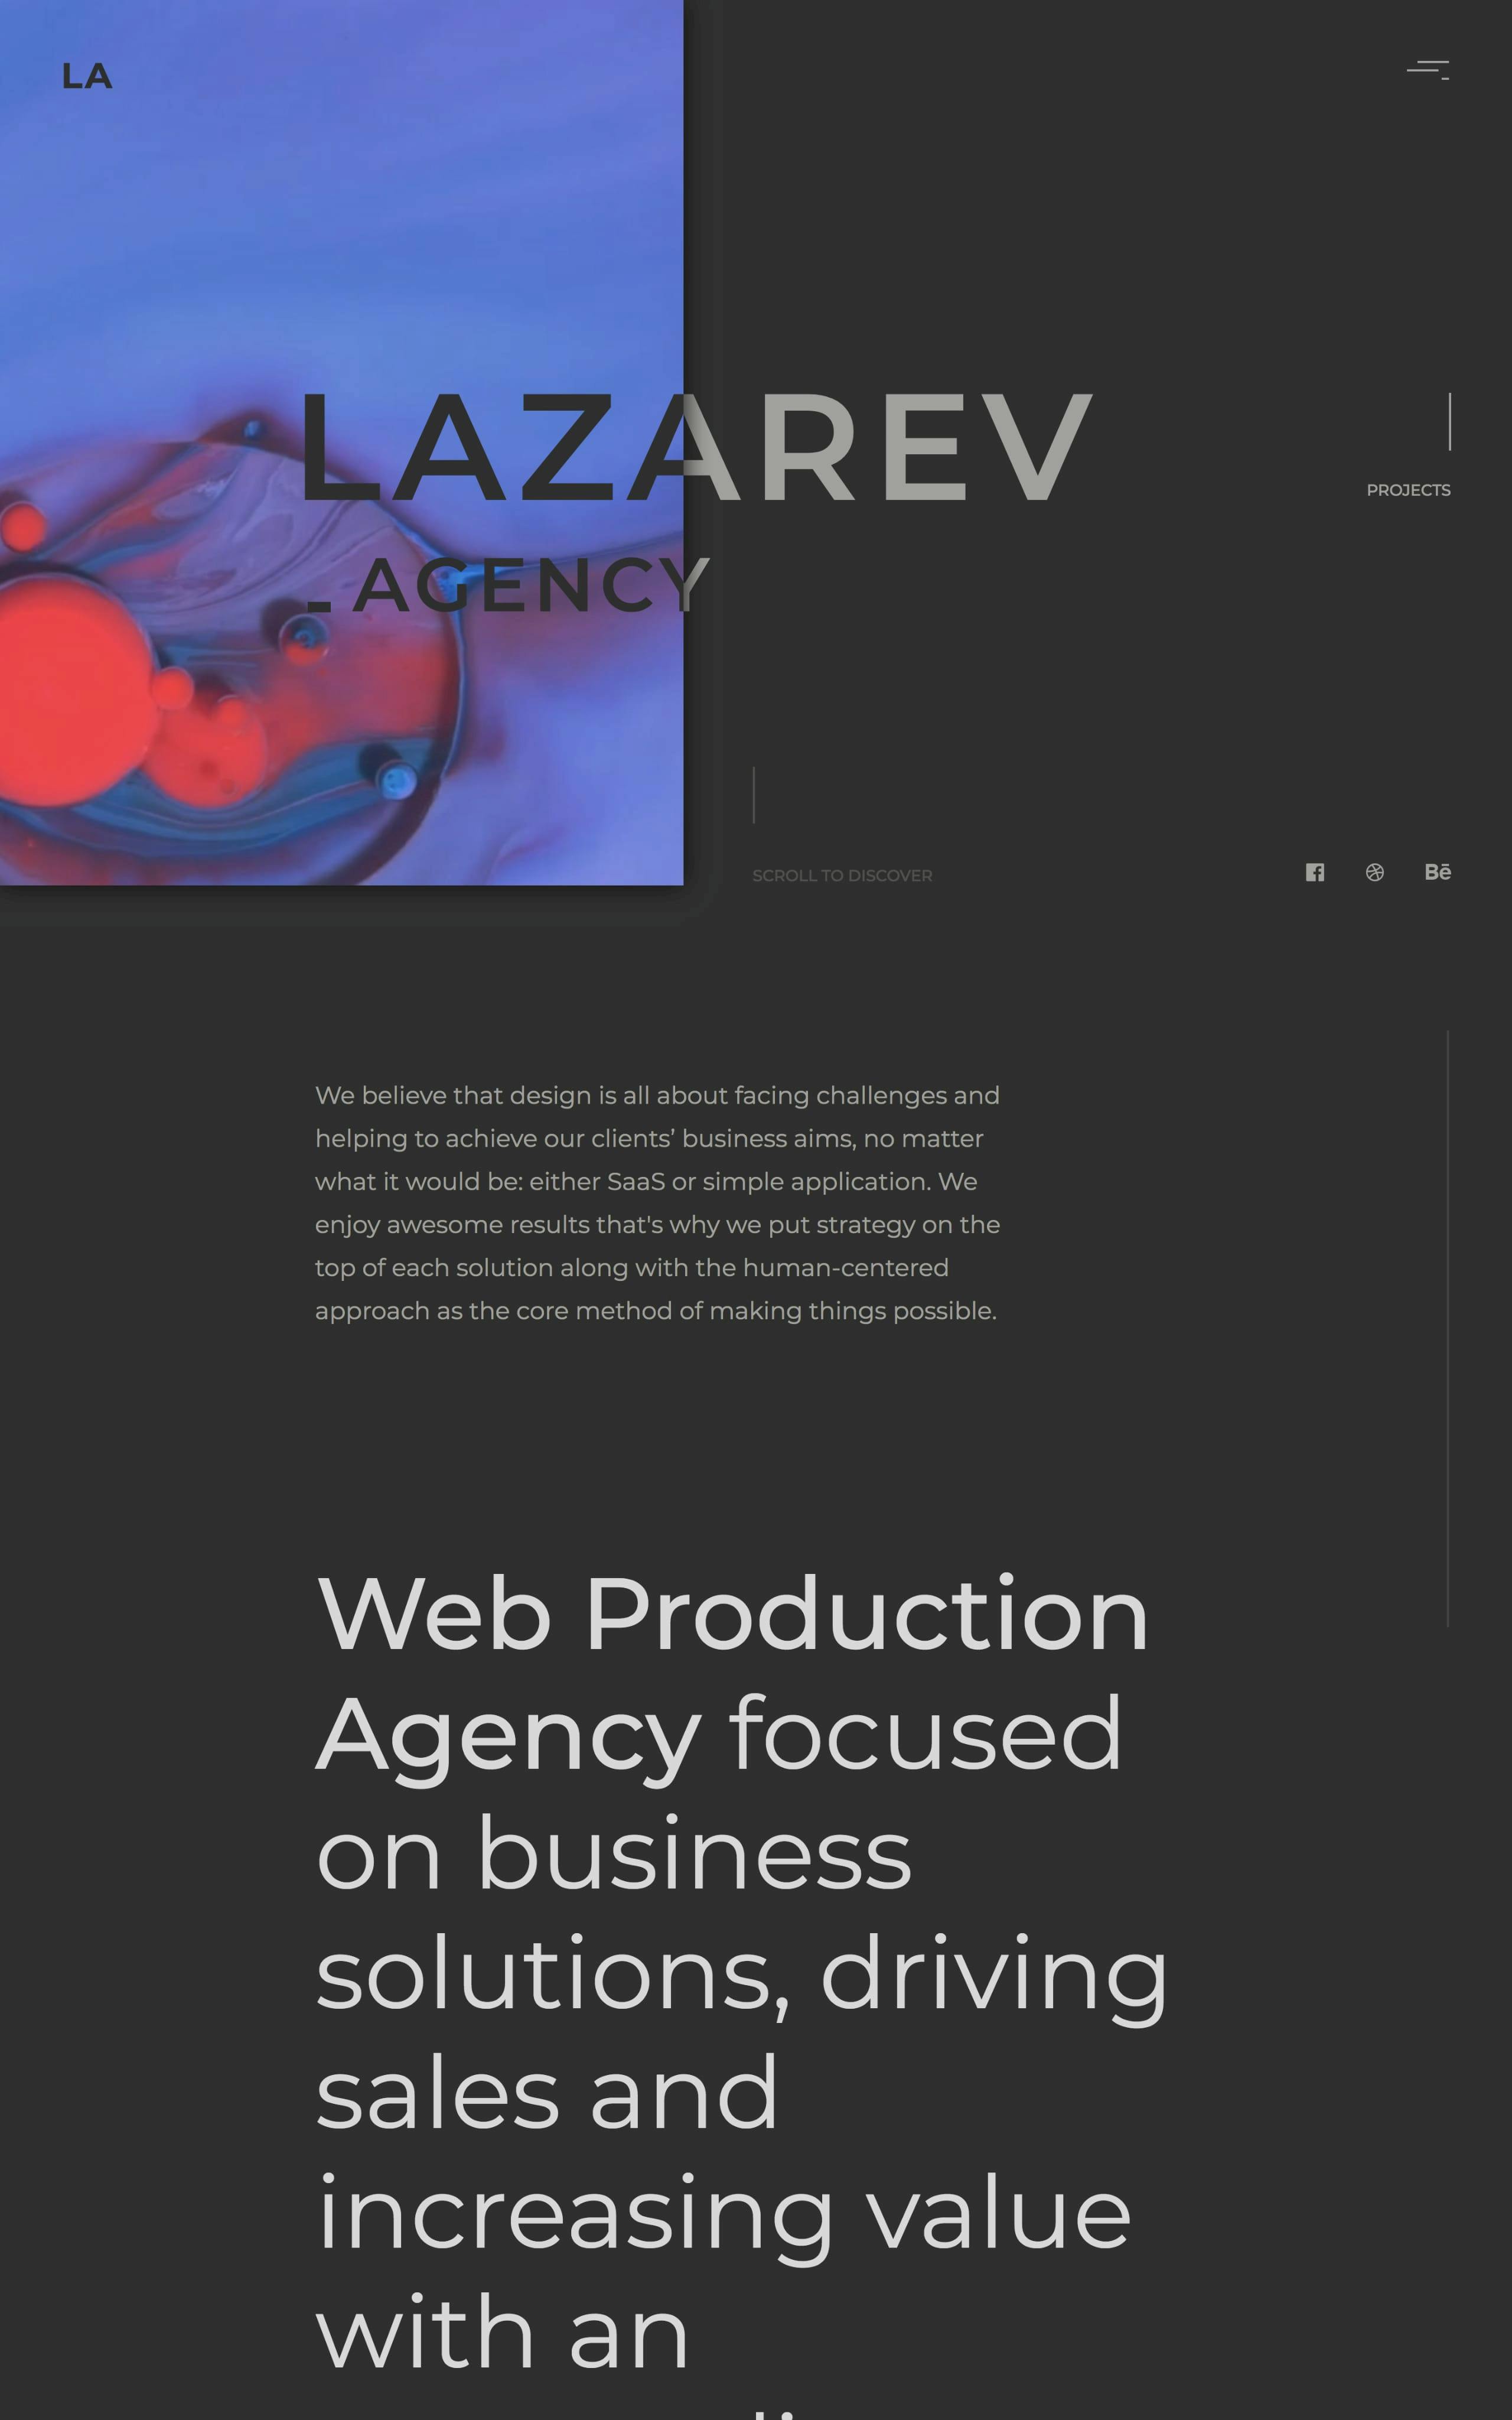 Lazarev Agency Website Screenshot